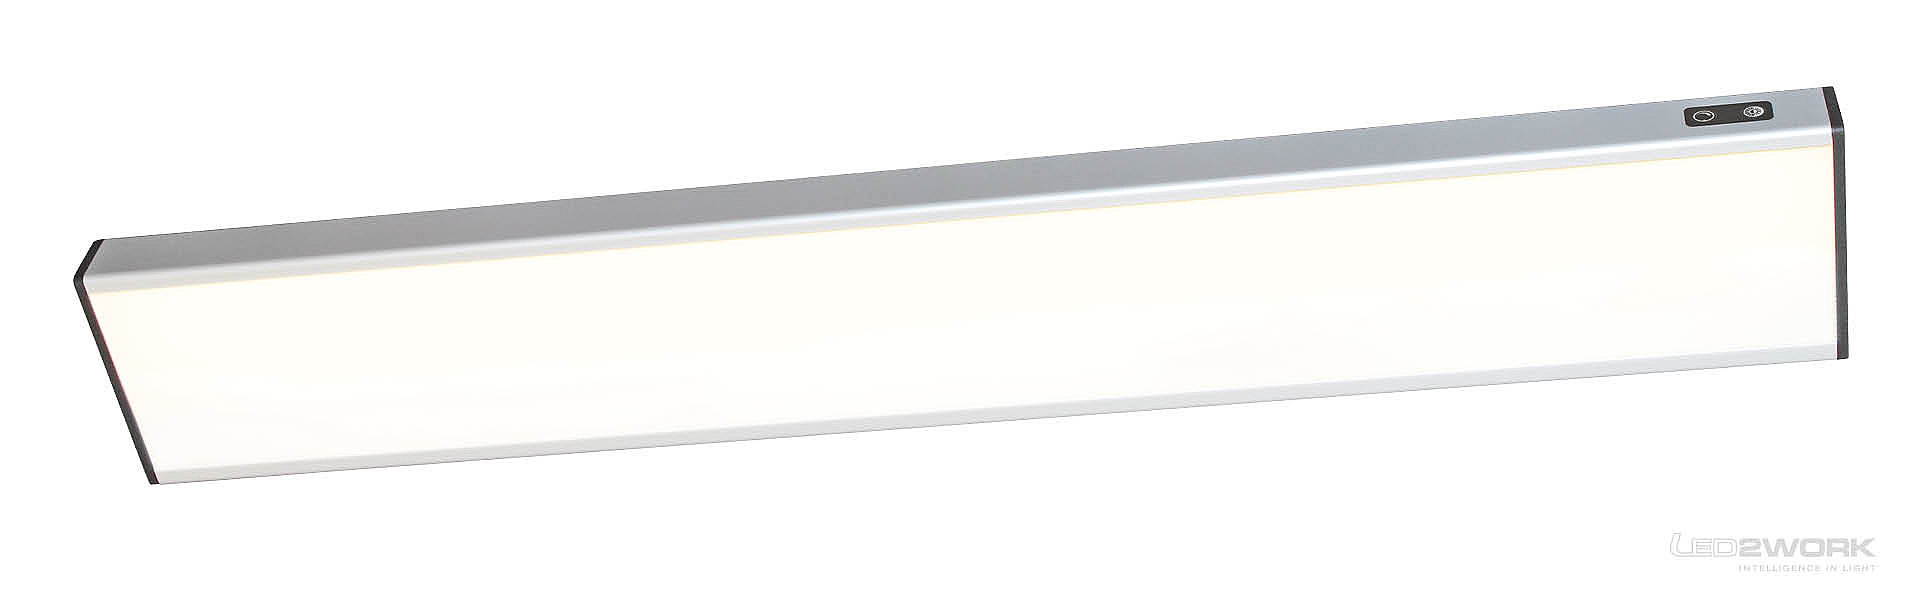 Abbildung der LED Arbeitsplatzleuchte | LED Systemleuchte SYSTEMLED TUNABLE WHITE von LED2WORK